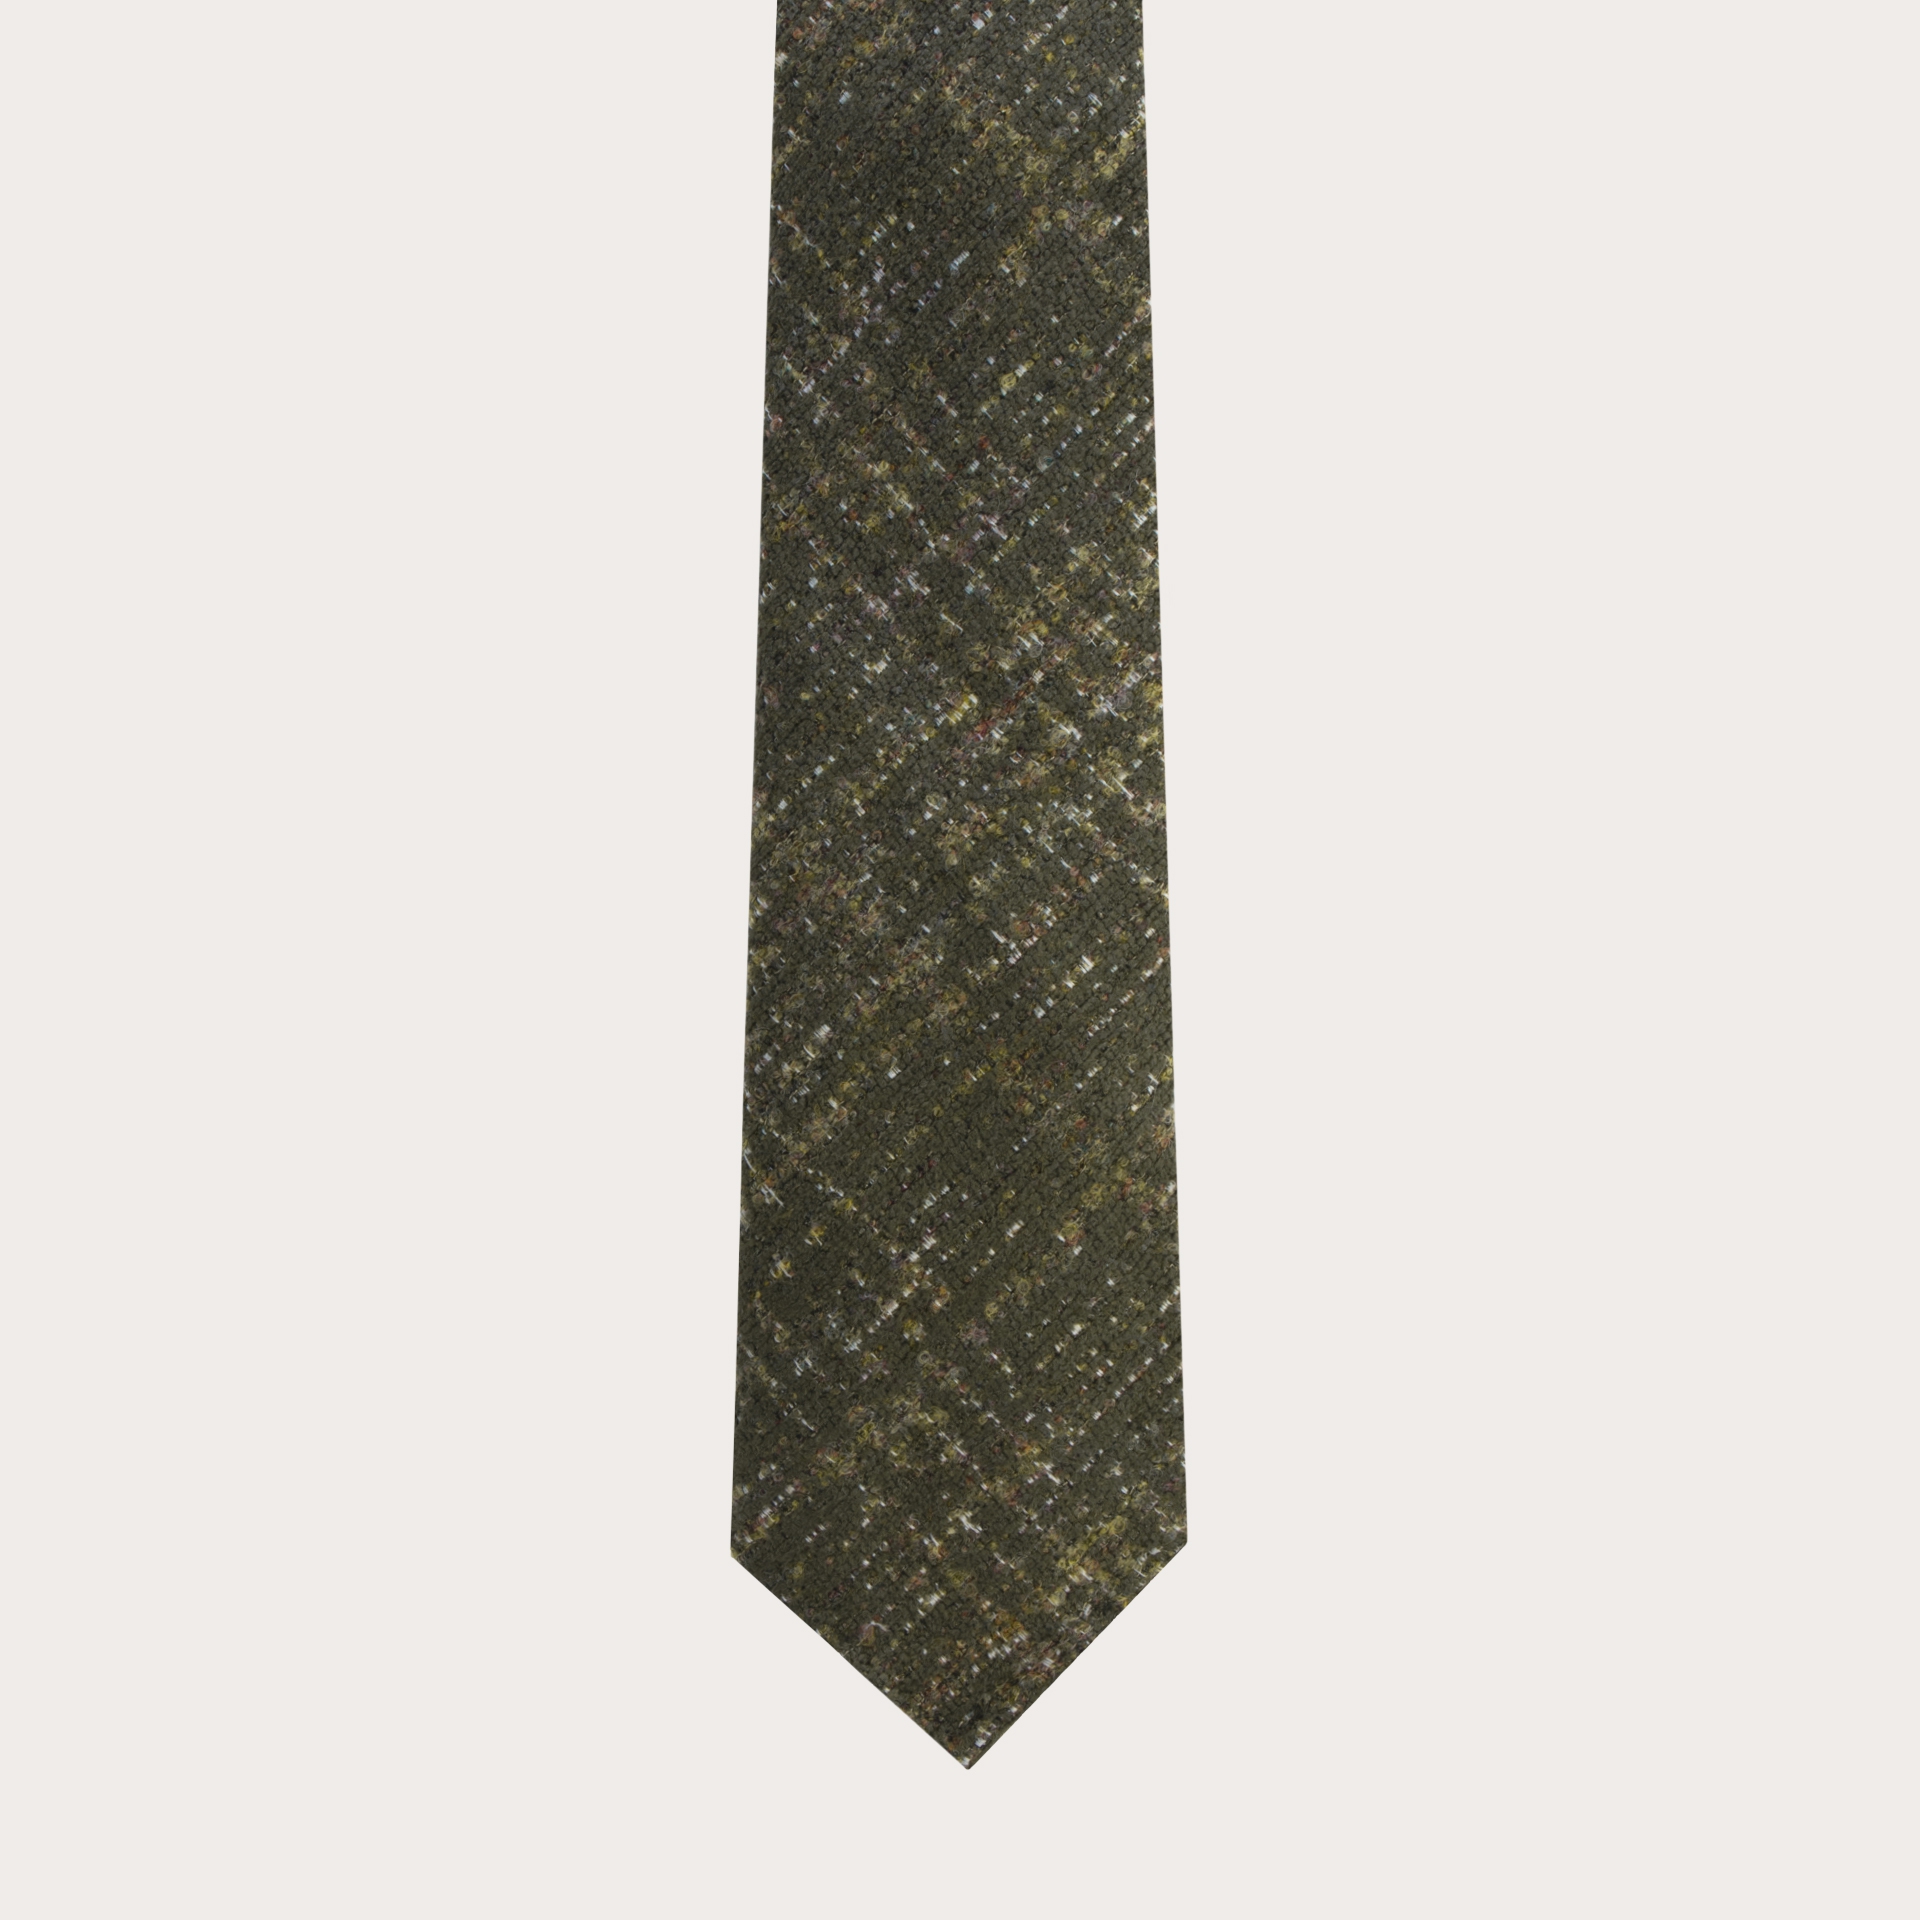 BRUCLE Ungefütterte Krawatte tartanmuster grun